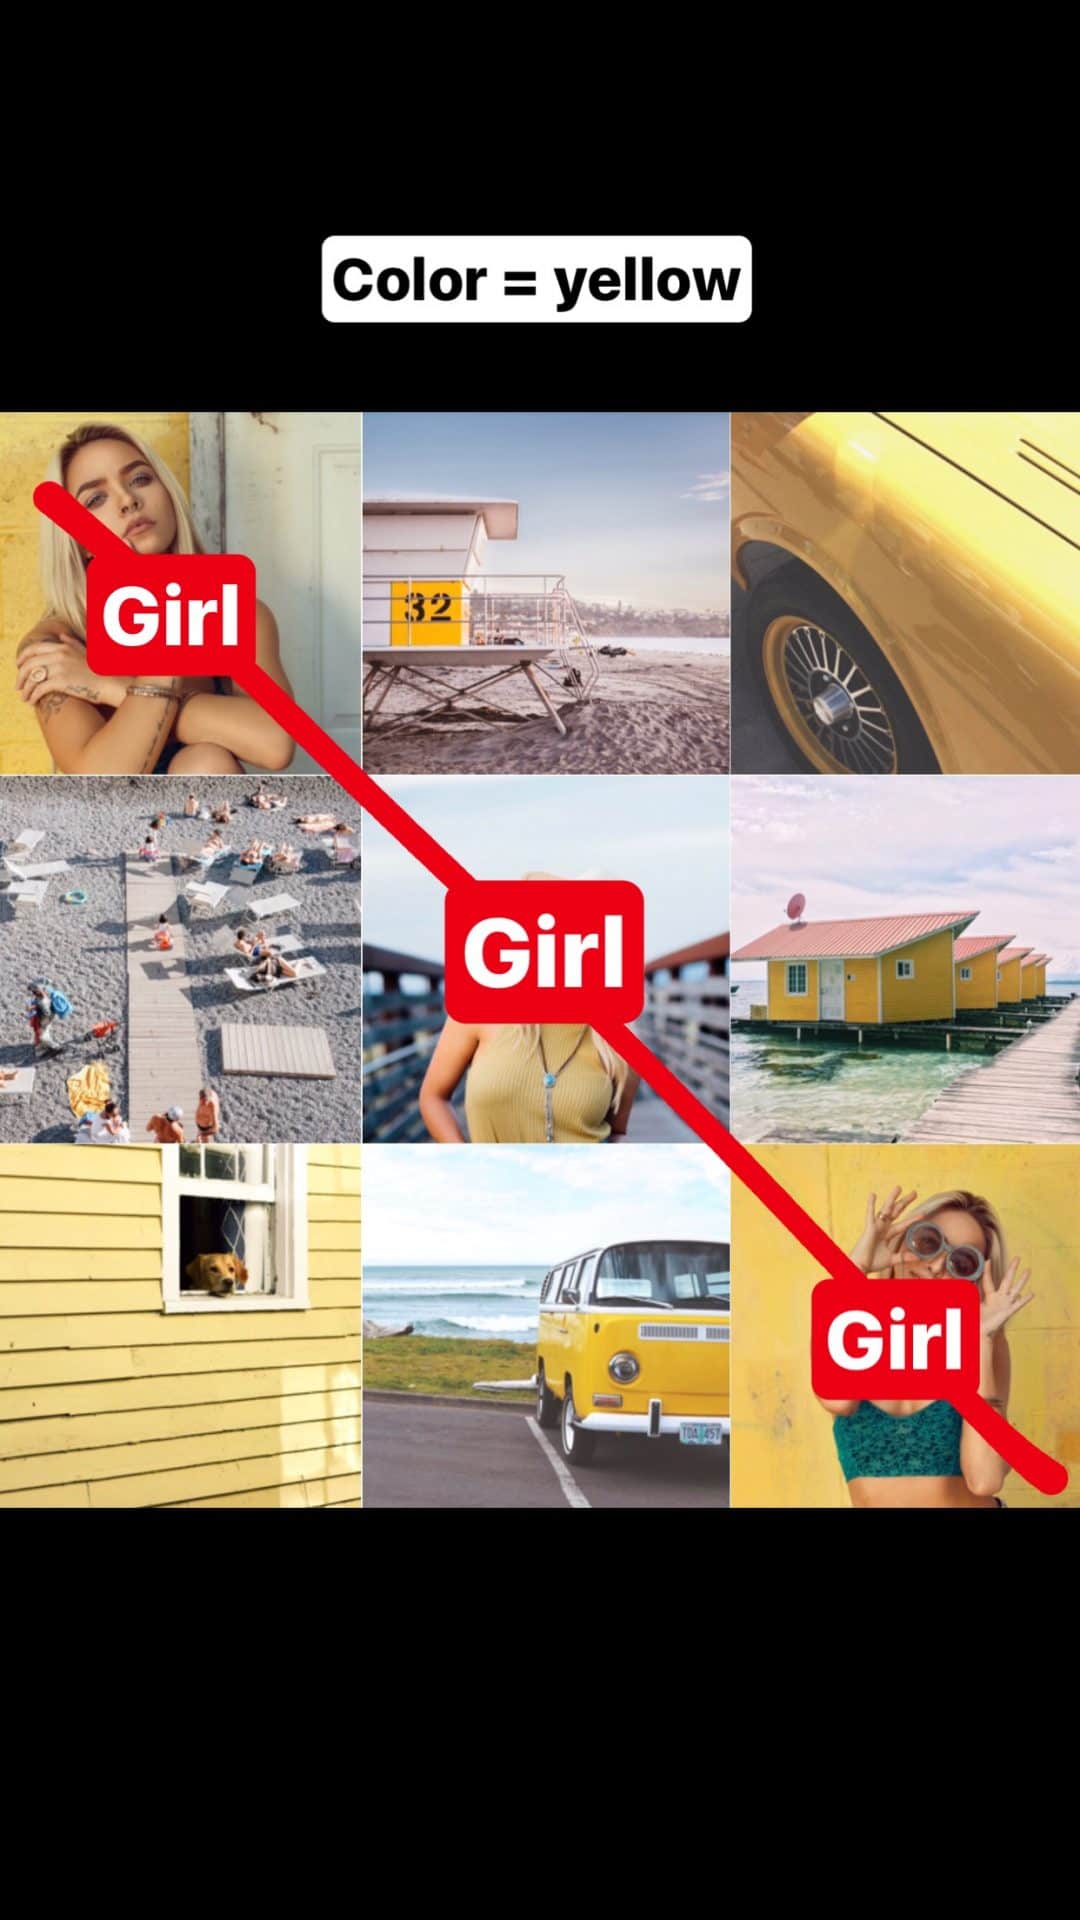 instagram grid layout app